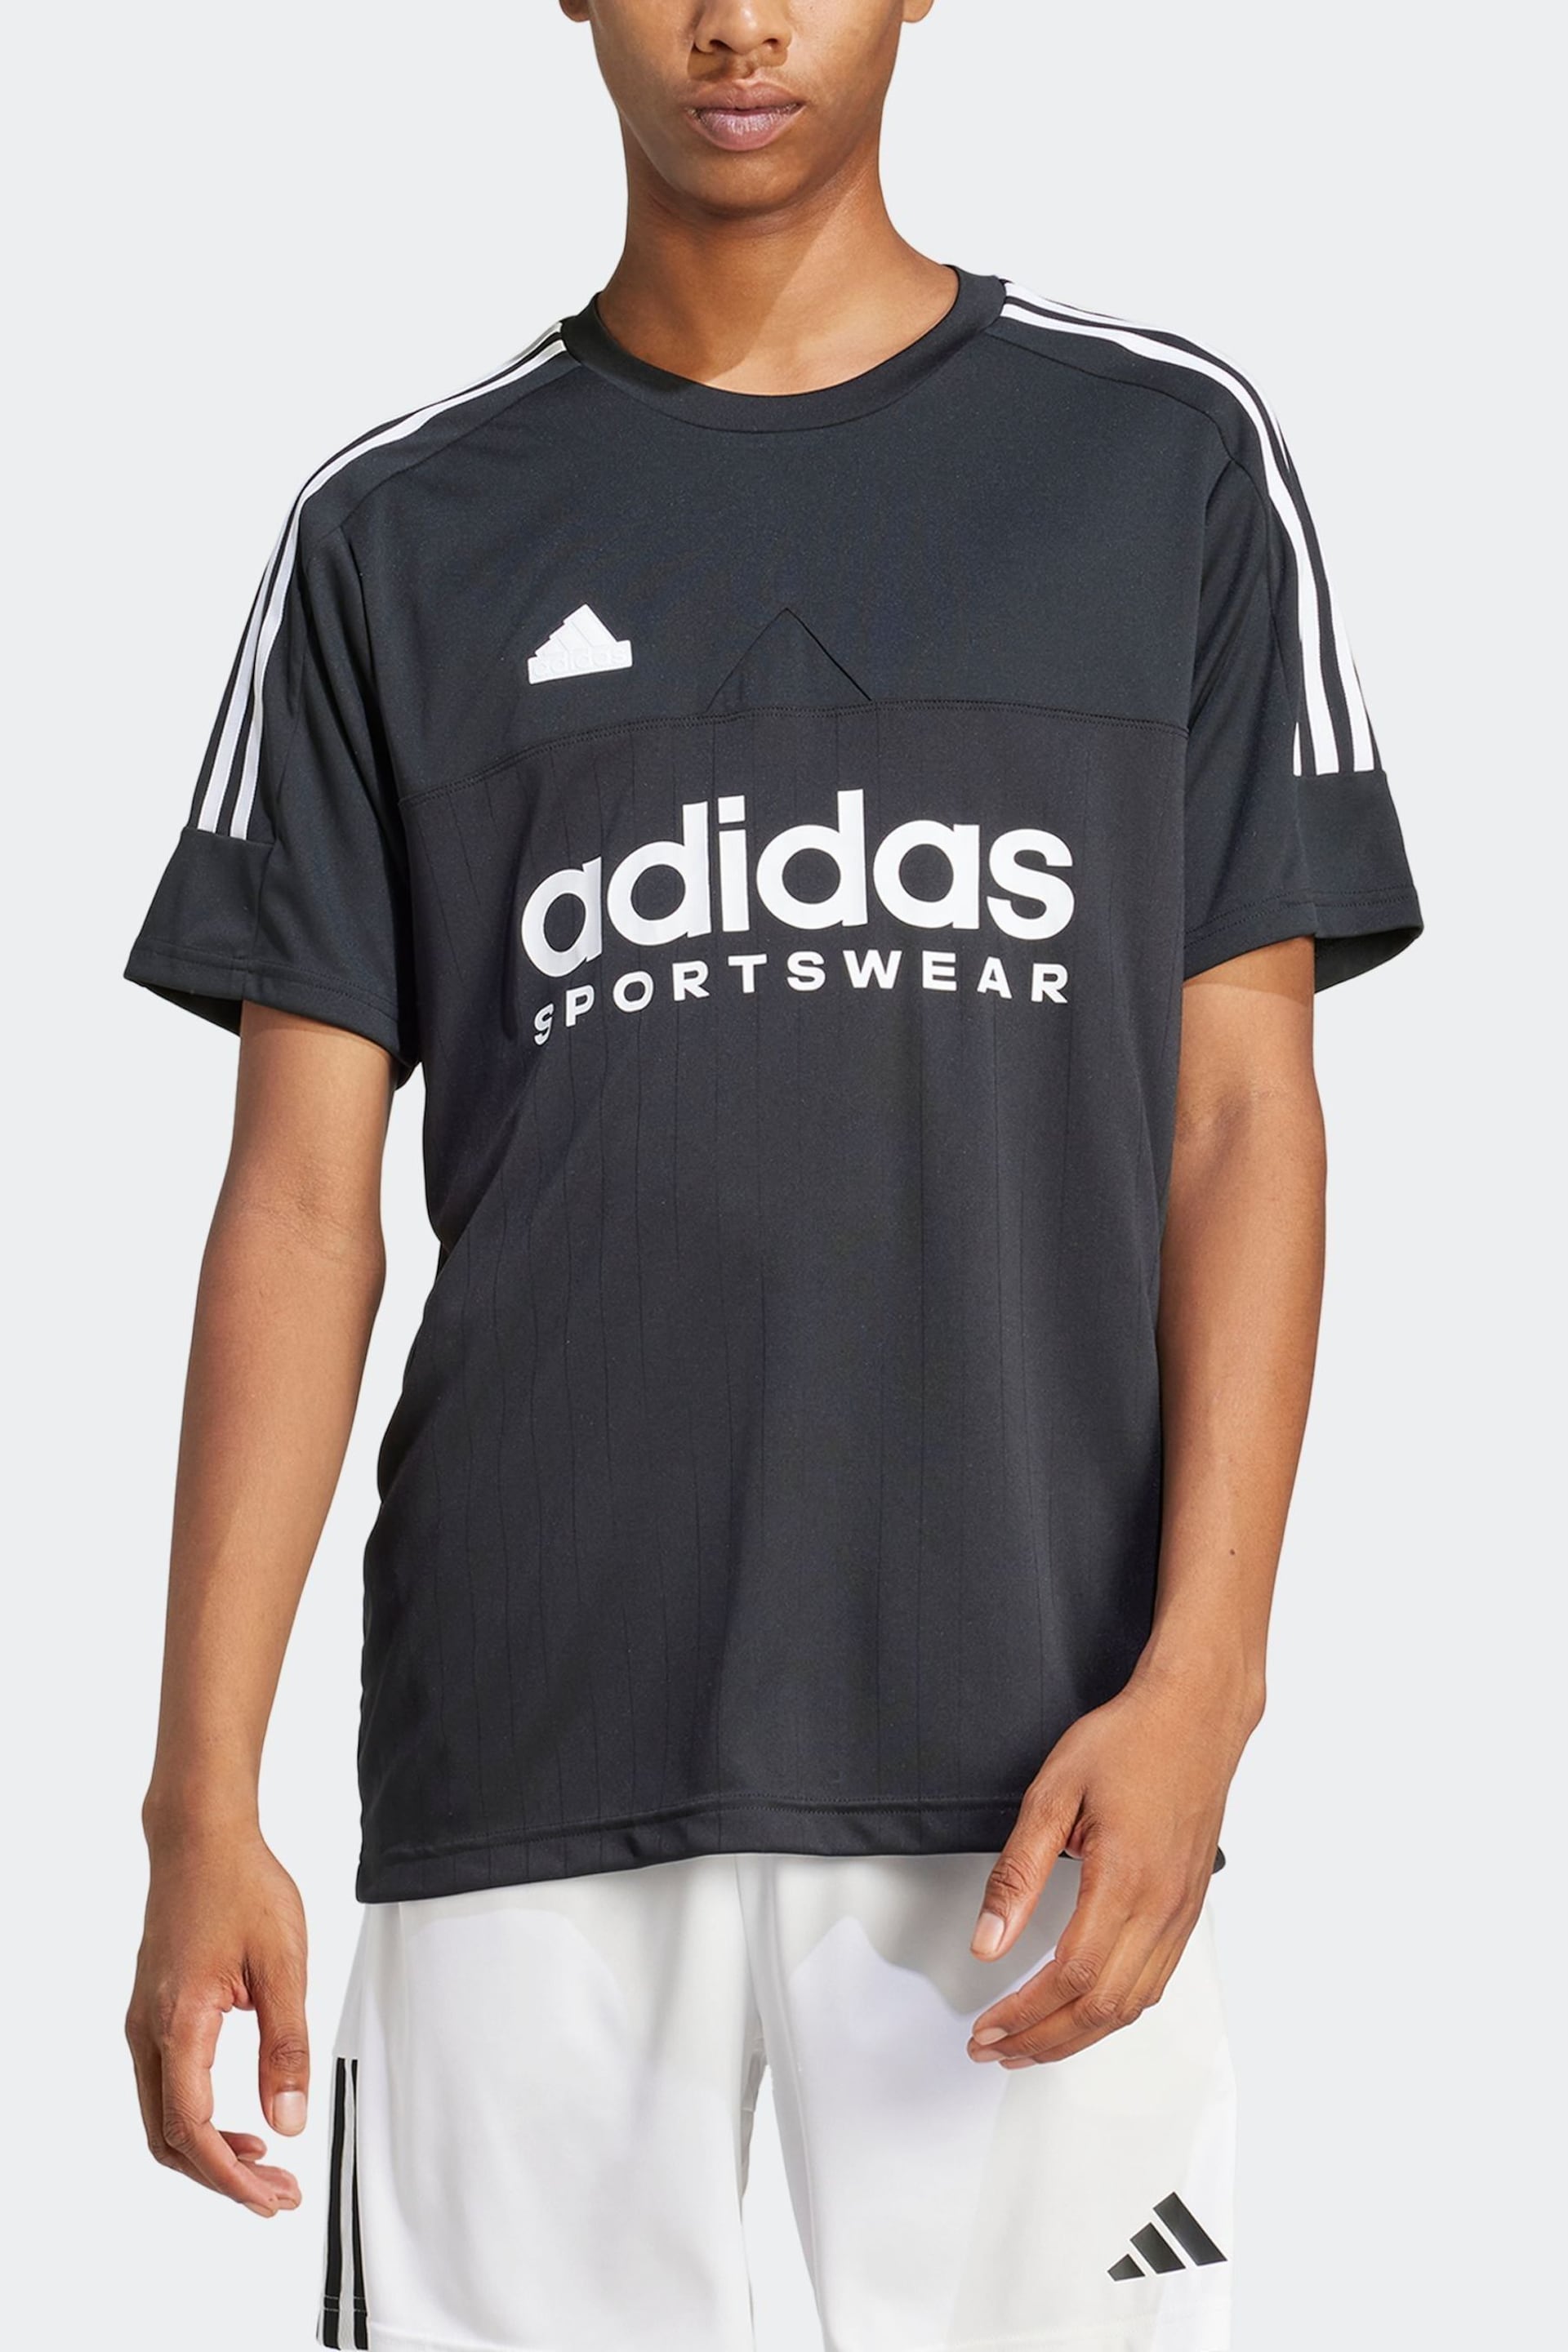 adidas Black Tiro T-Shirt - Image 3 of 7